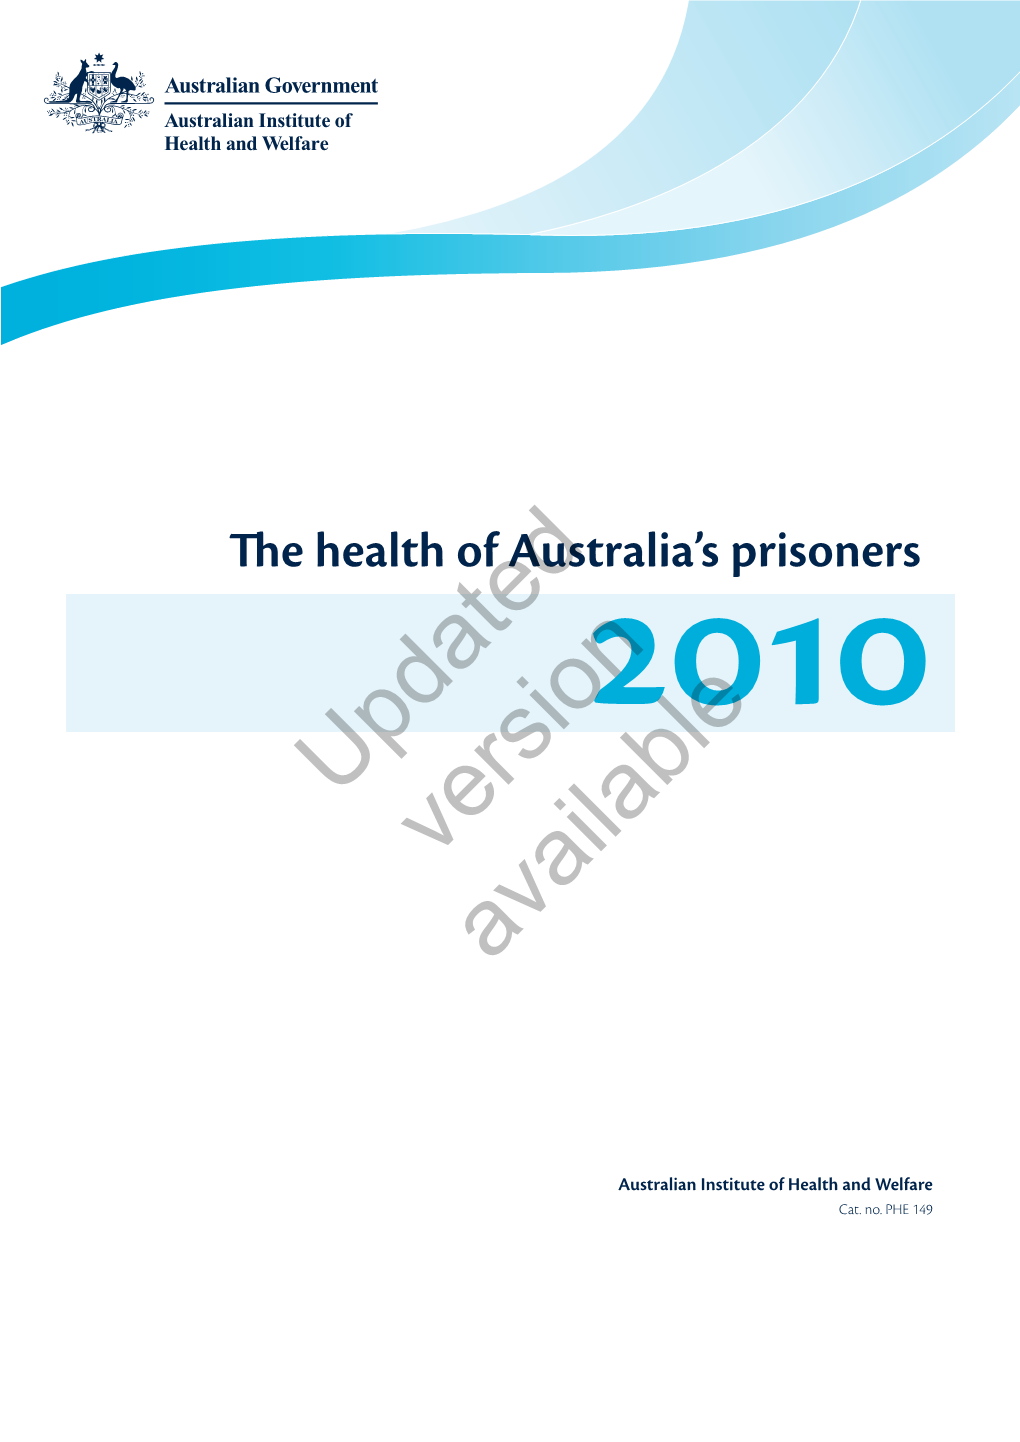 The Health of Australia's Prisoners 2010